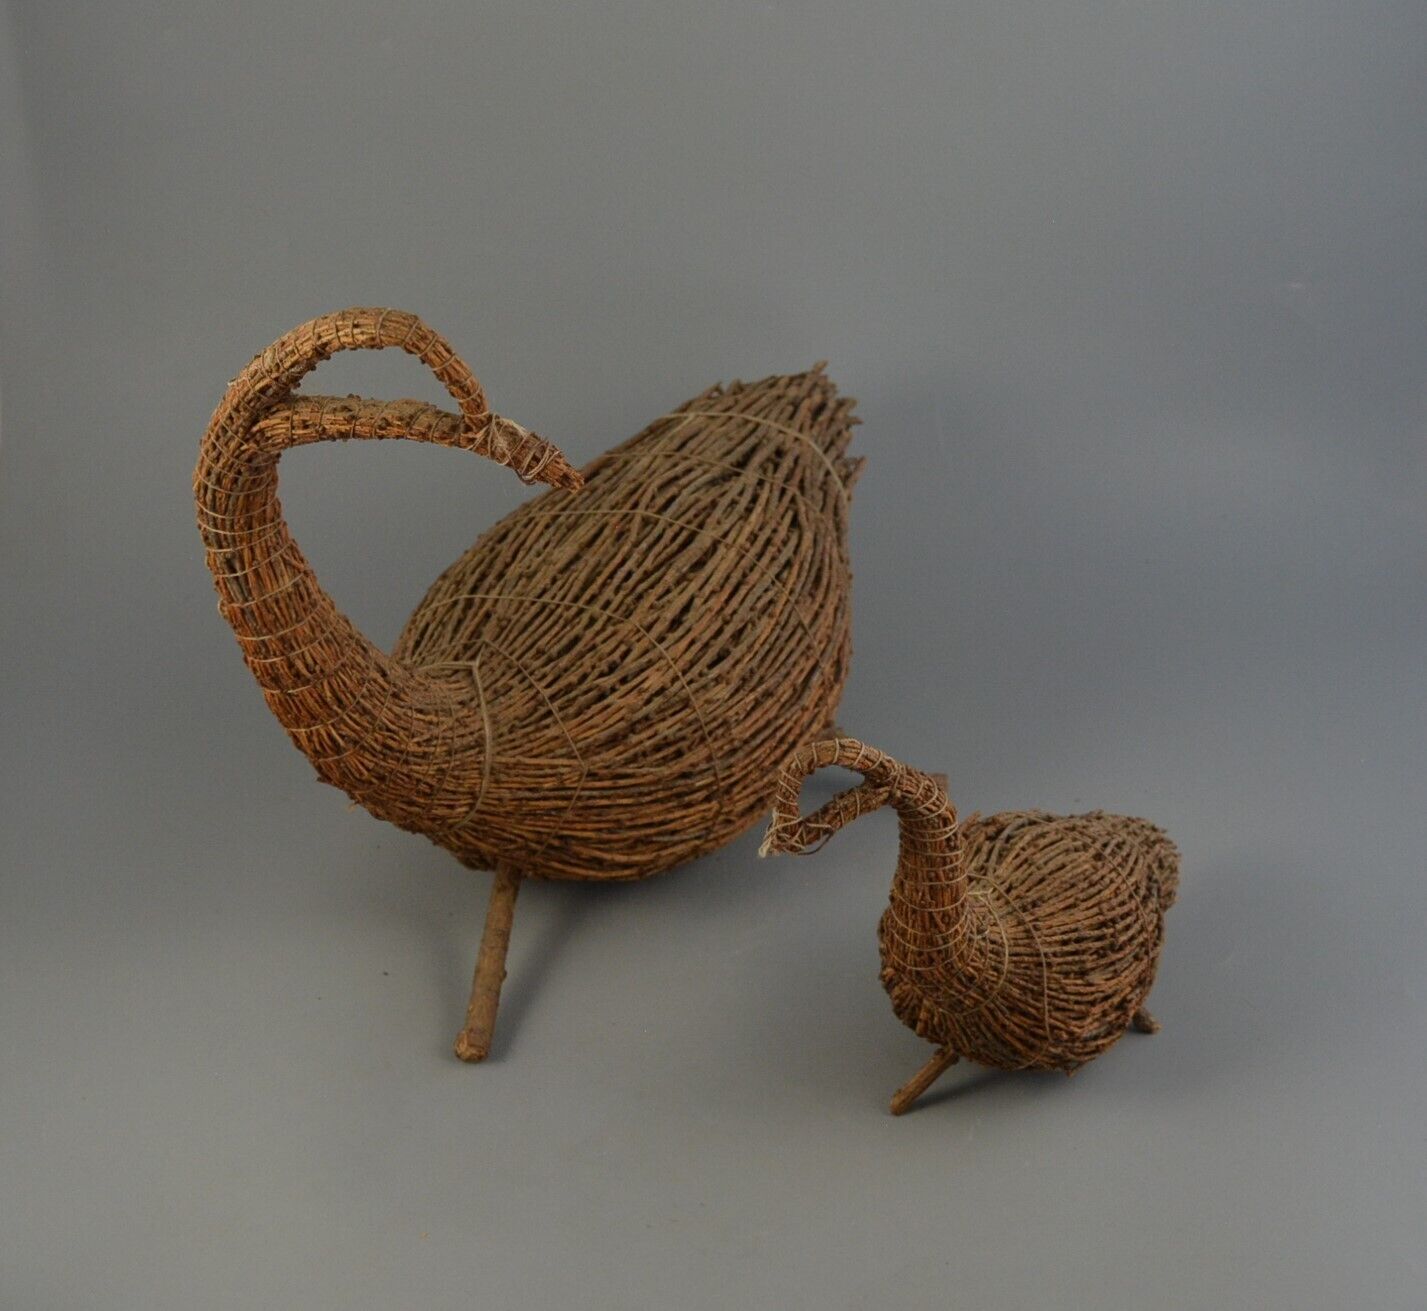 2 Cree Indian Handmade Duck Goose Decoys - Tamarack Twig Sculpture Folk Art